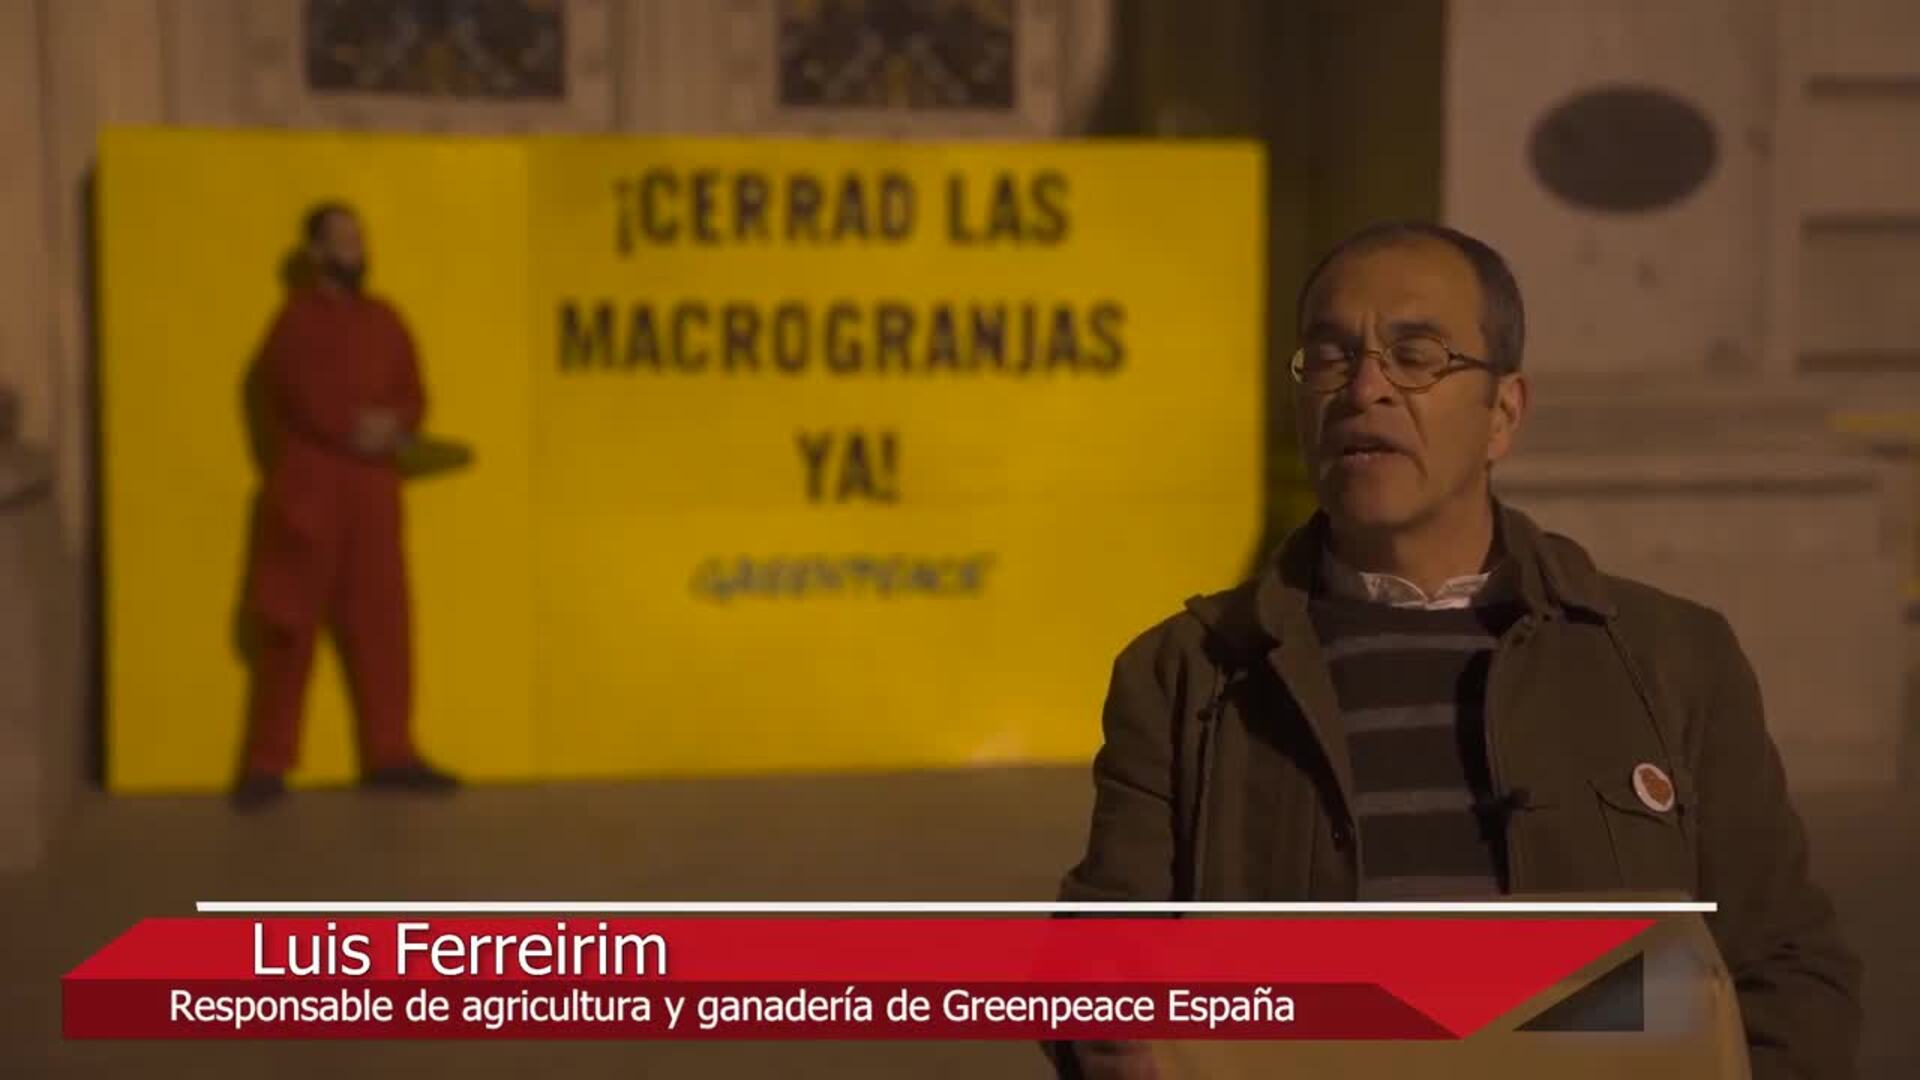 Greenpeace bloquea accesos a Agricultura en protesta por las macrogranjas